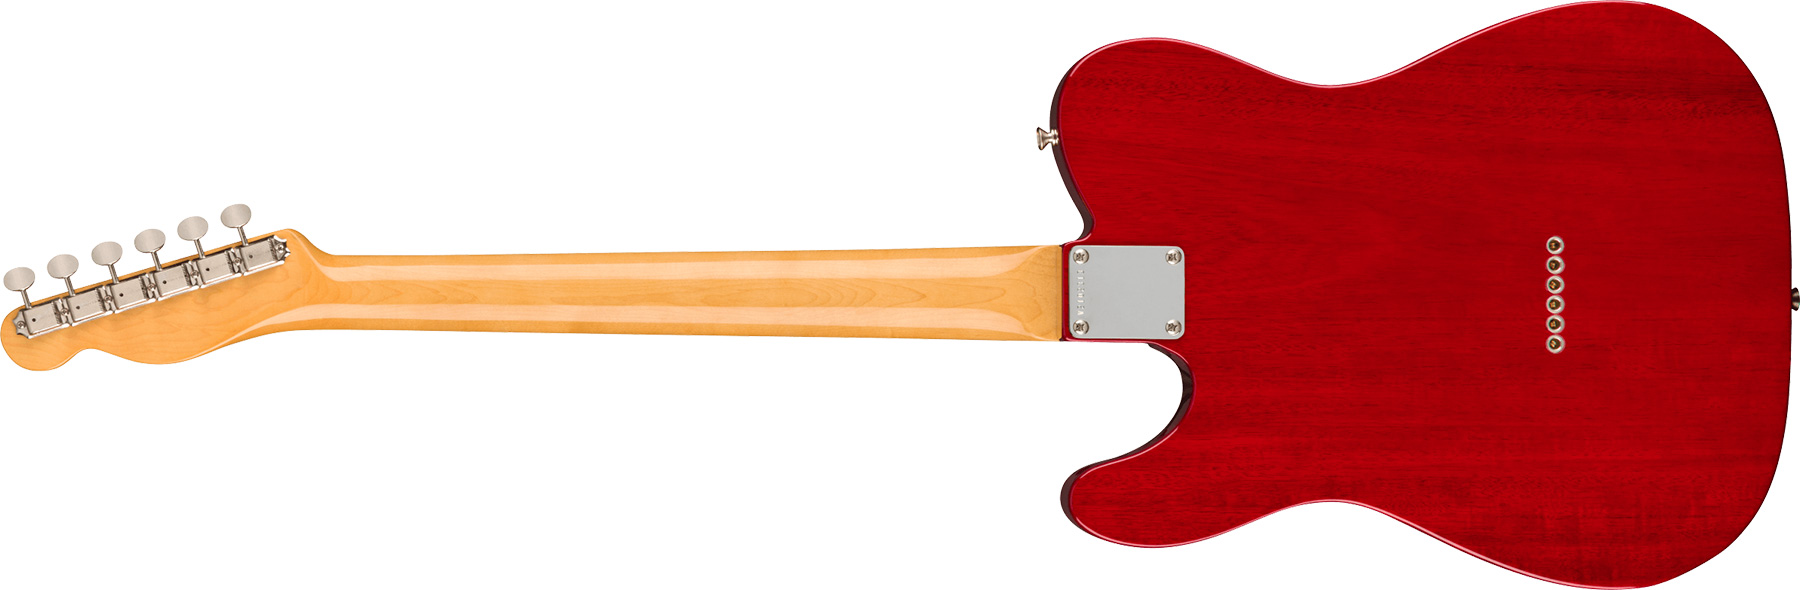 Fender Tele 1963 American Vintage Ii Usa 2s Ht Rw - Crimson Red Transparent - E-Gitarre in Teleform - Variation 1